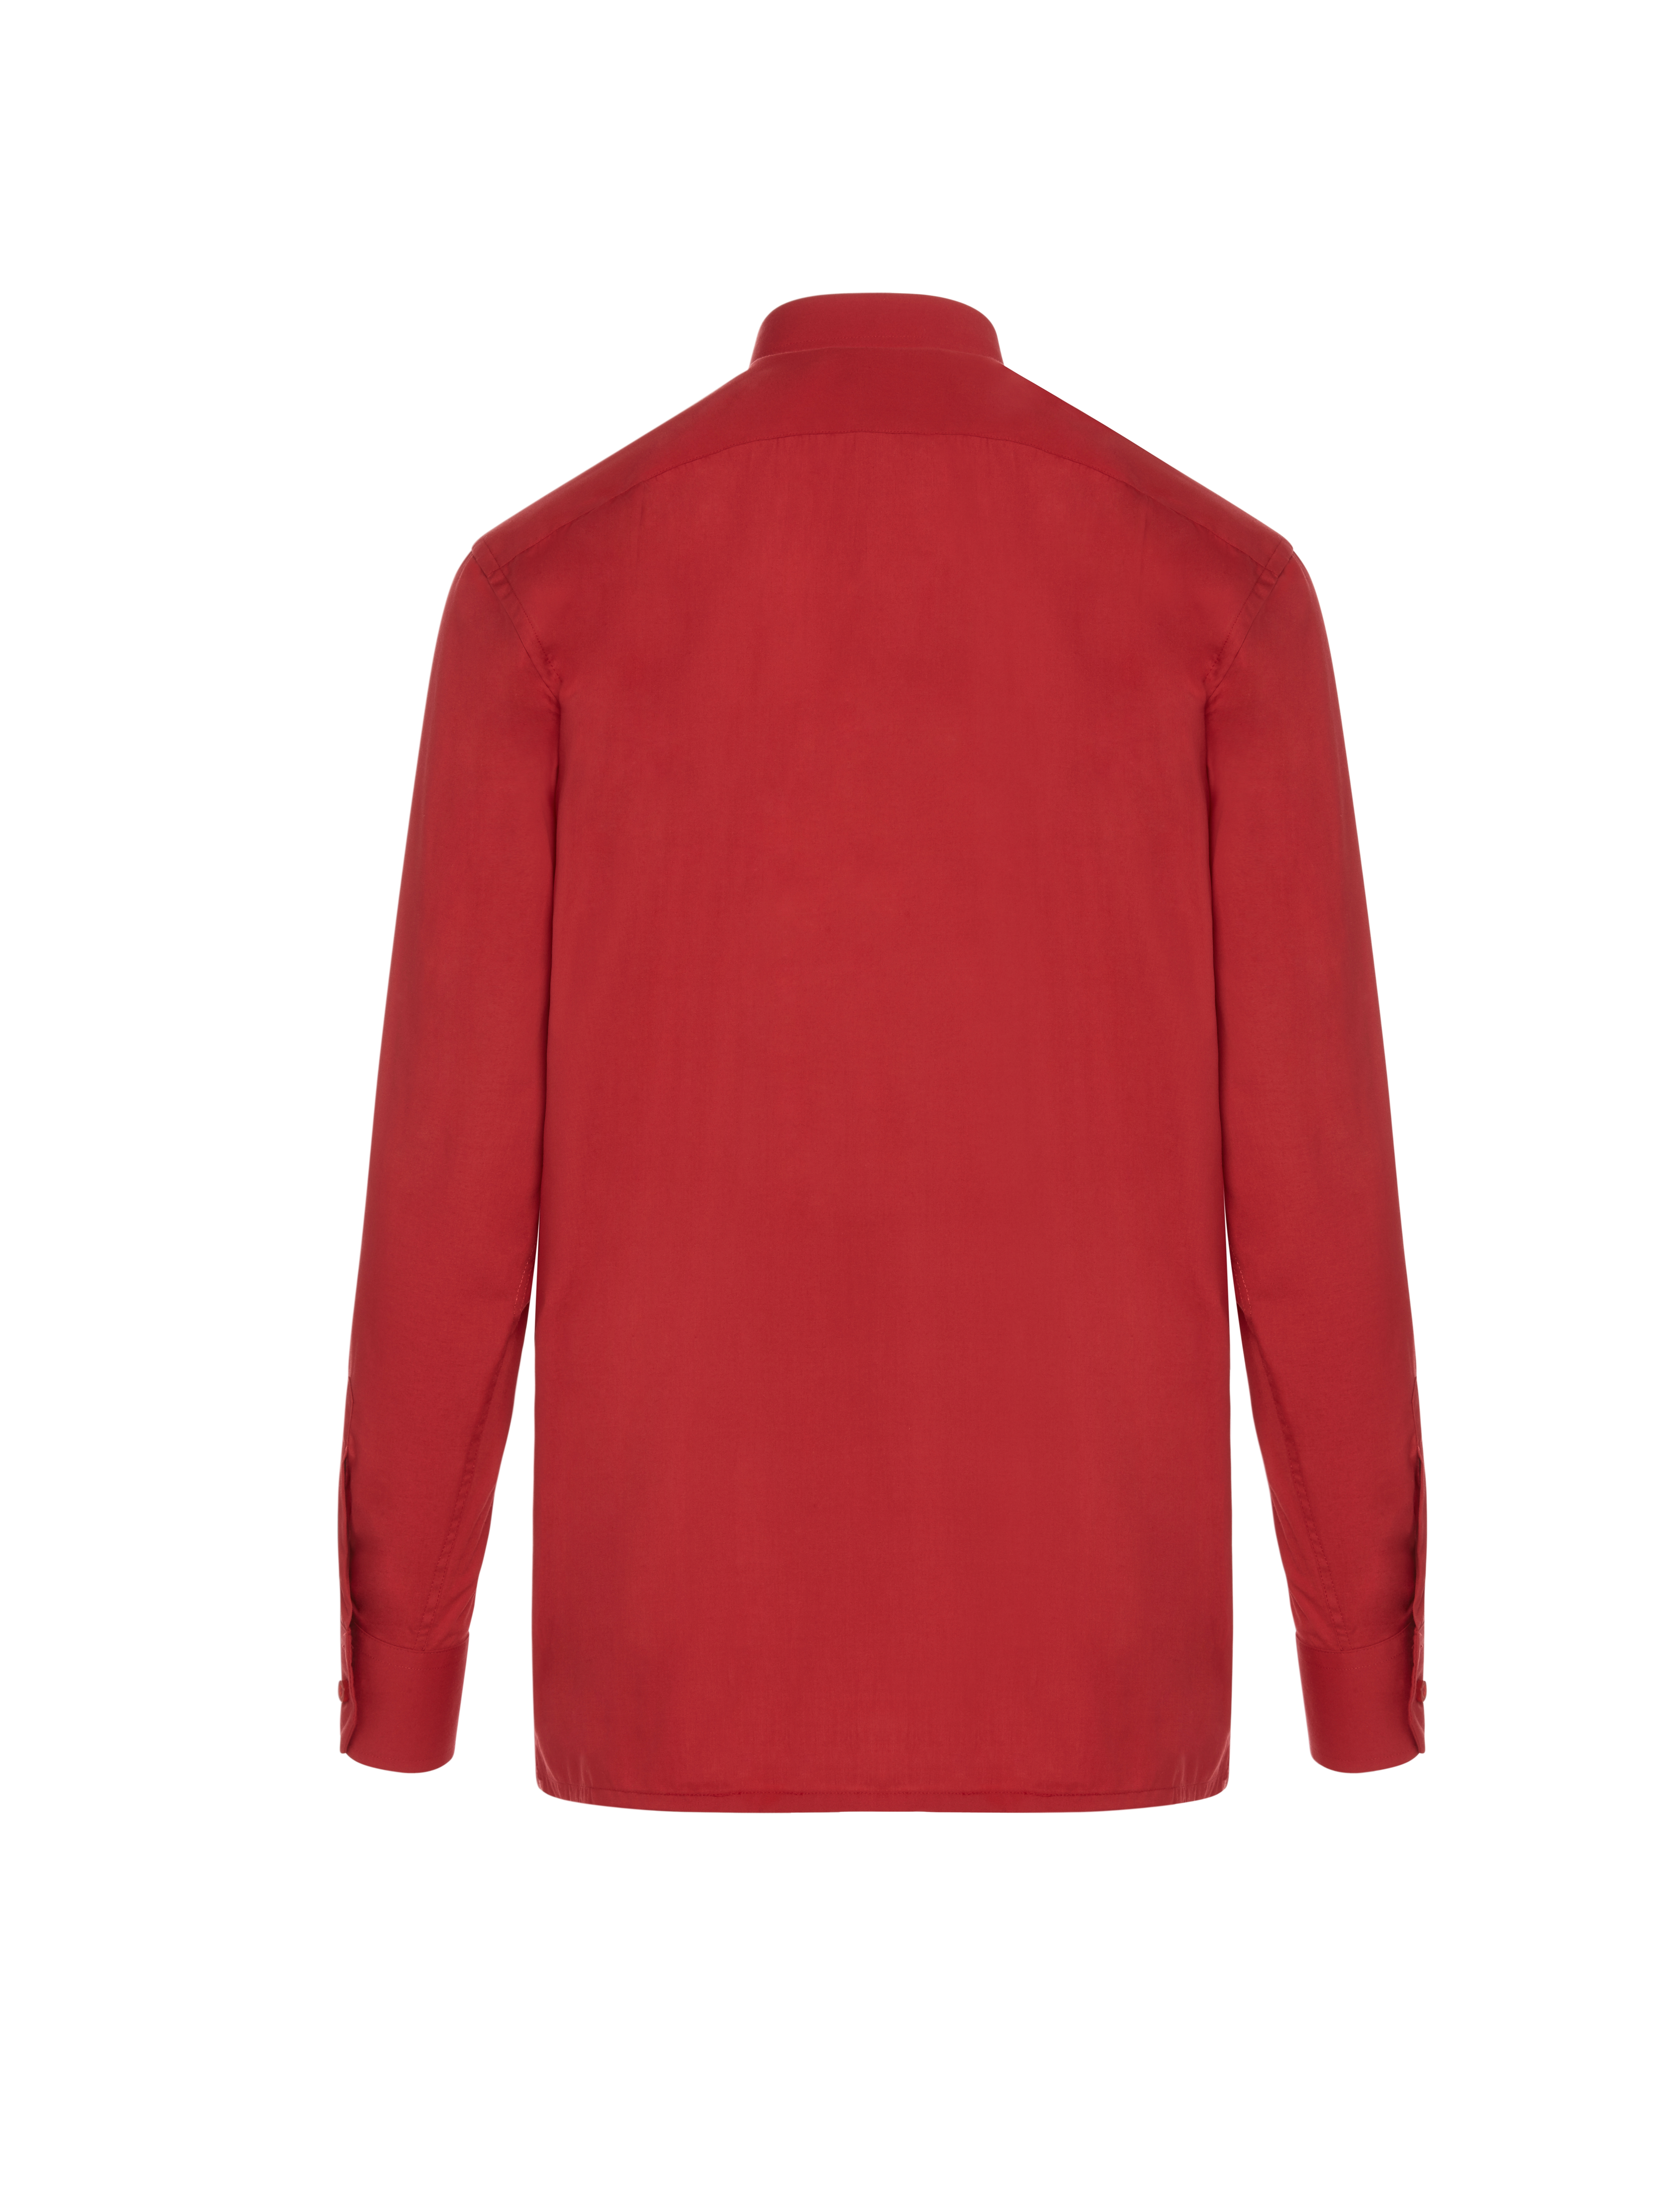 Porto Filo Men’s Button Up Red Dress Shirt Fashion Fit – Portofilo Suits